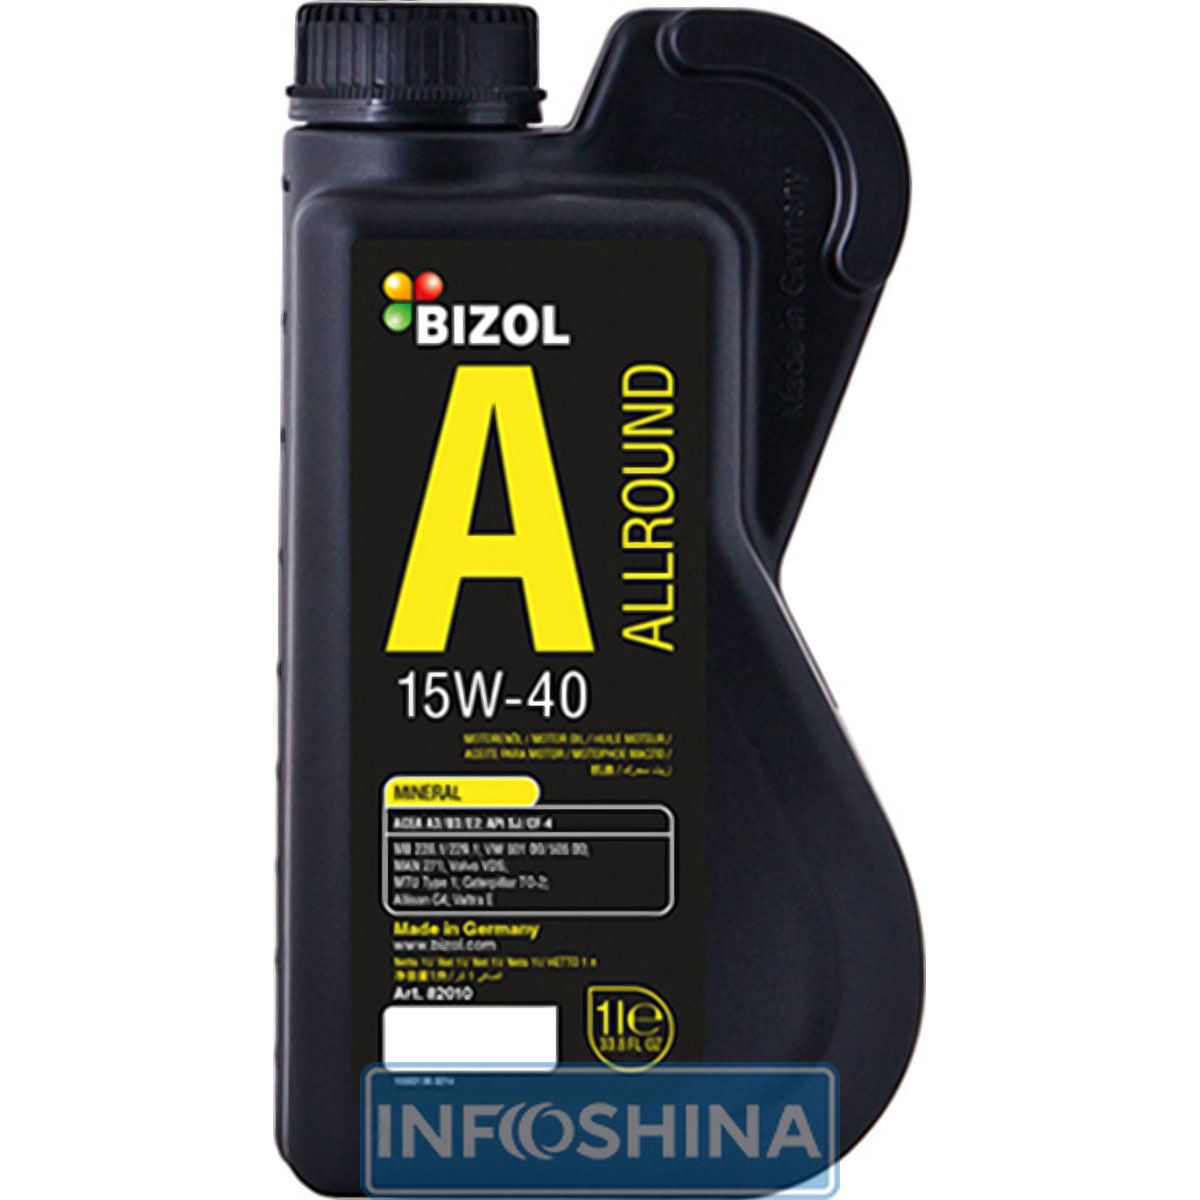 Купить масло Bizol Allround 15W-40 (1л)